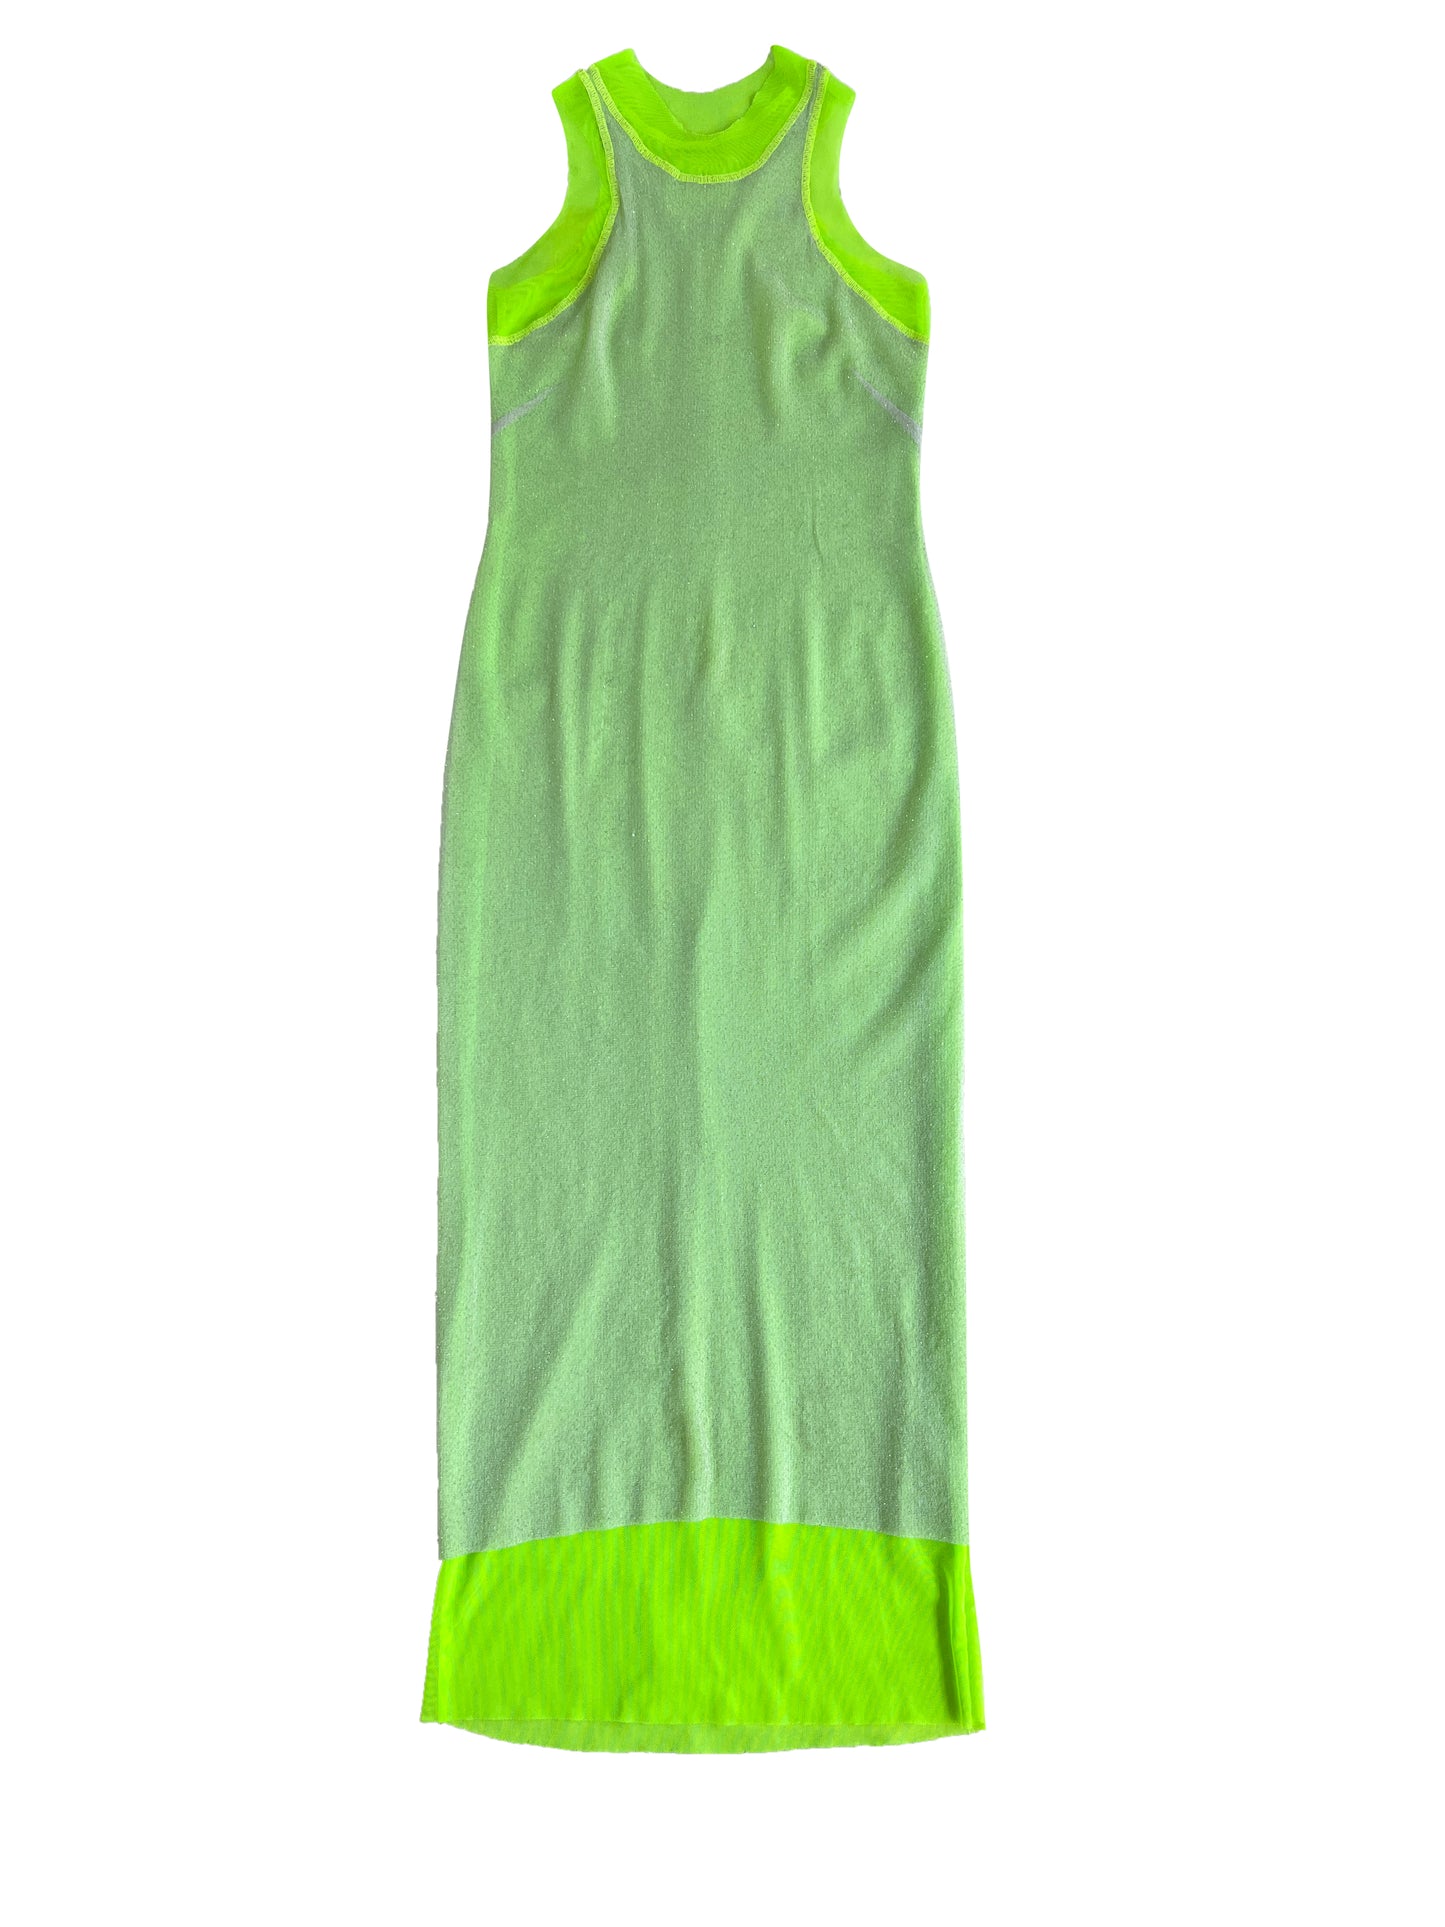 Lumo Racy Column Stretch Dress